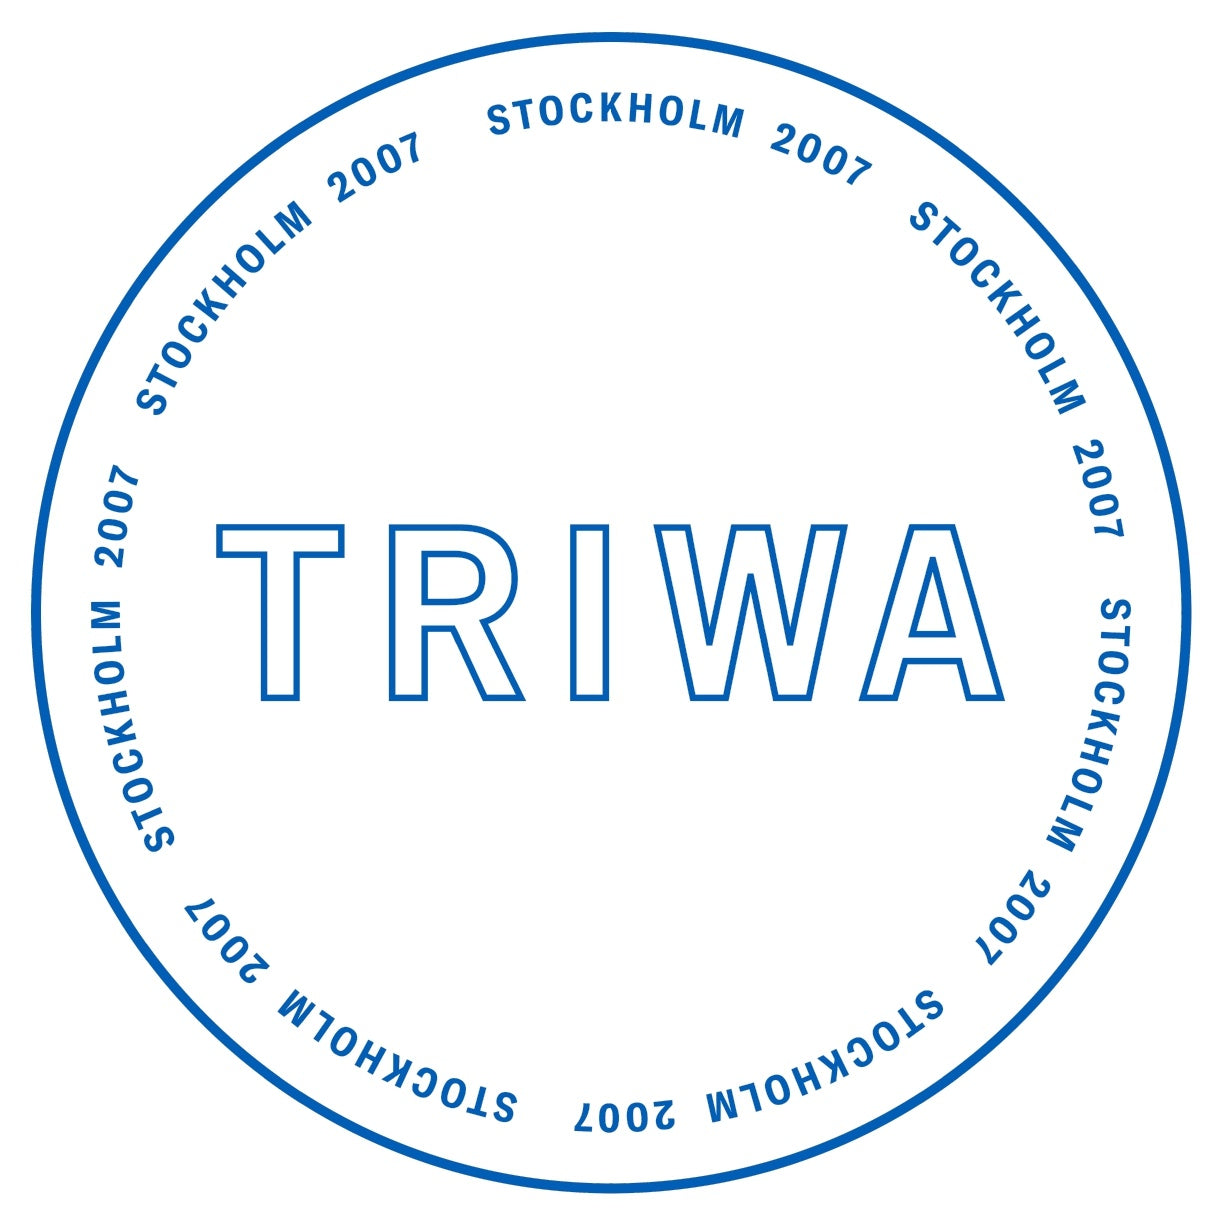 triwa.com